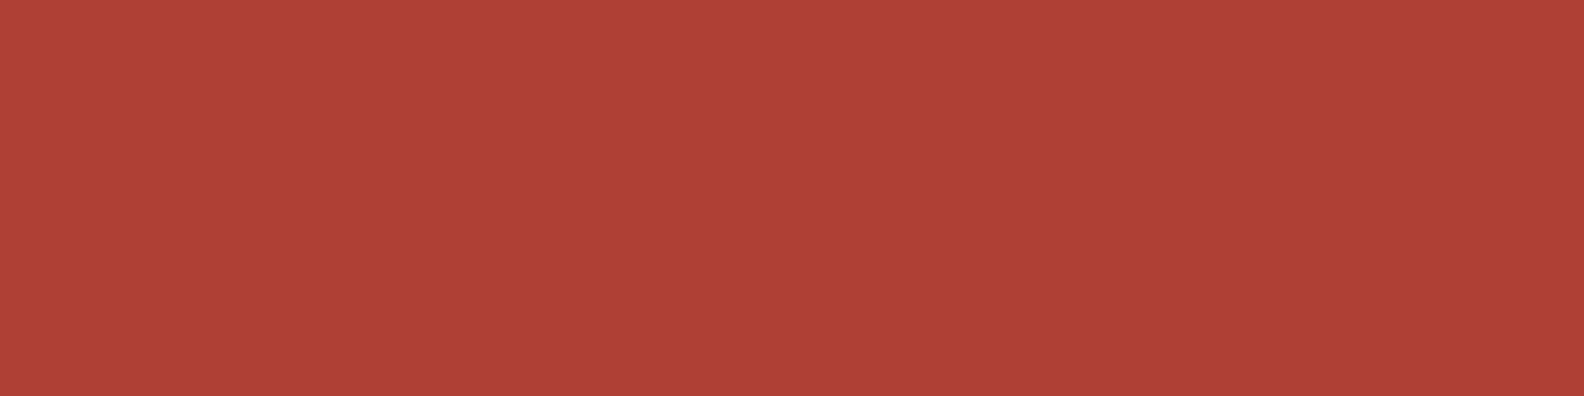 1584x396 Medium Carmine Solid Color Background